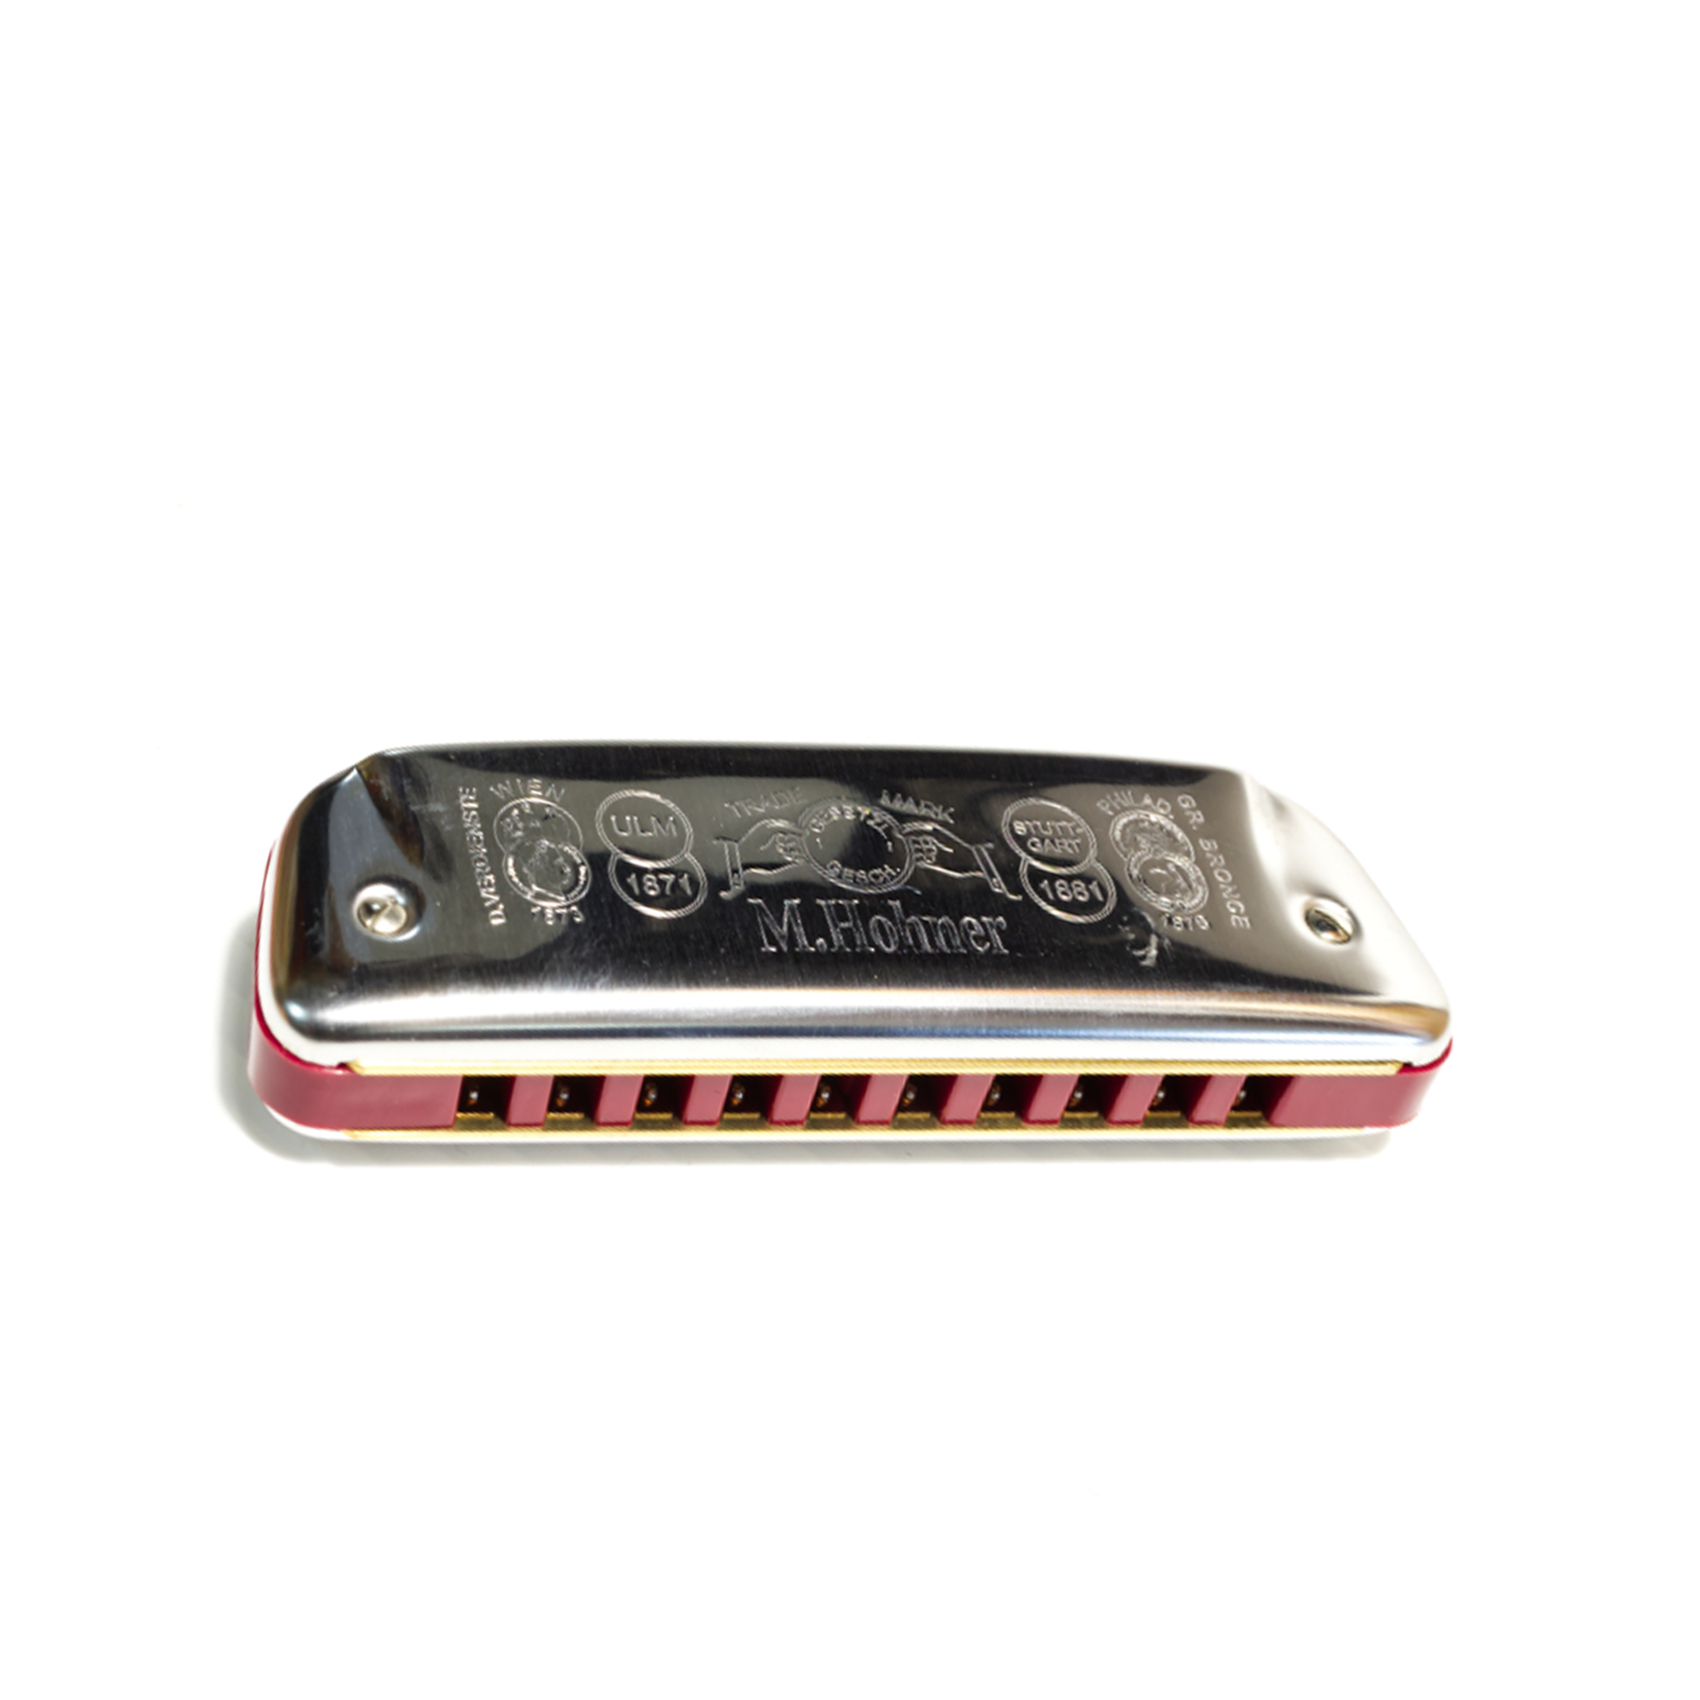 Hohner Golden Melody 540/20 A harmonica